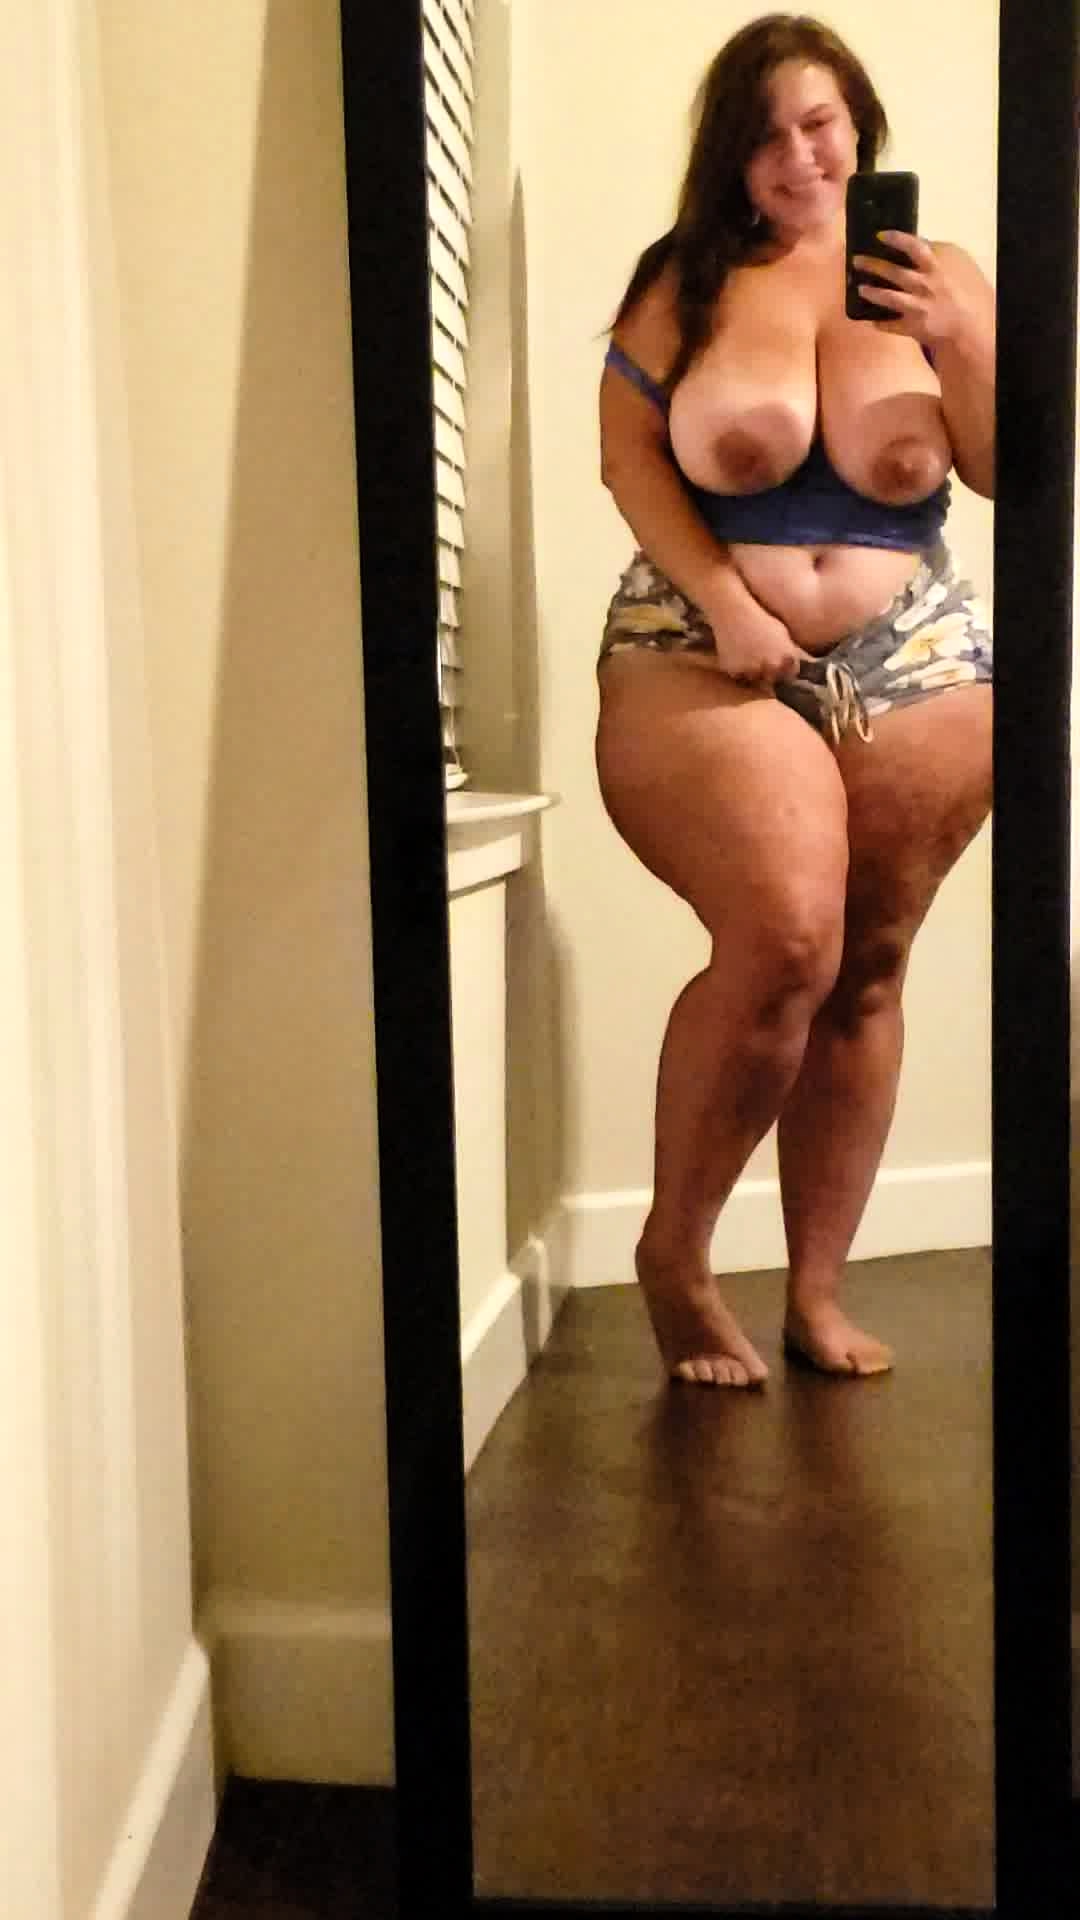 cheryl chatman add free fat latina porn photo